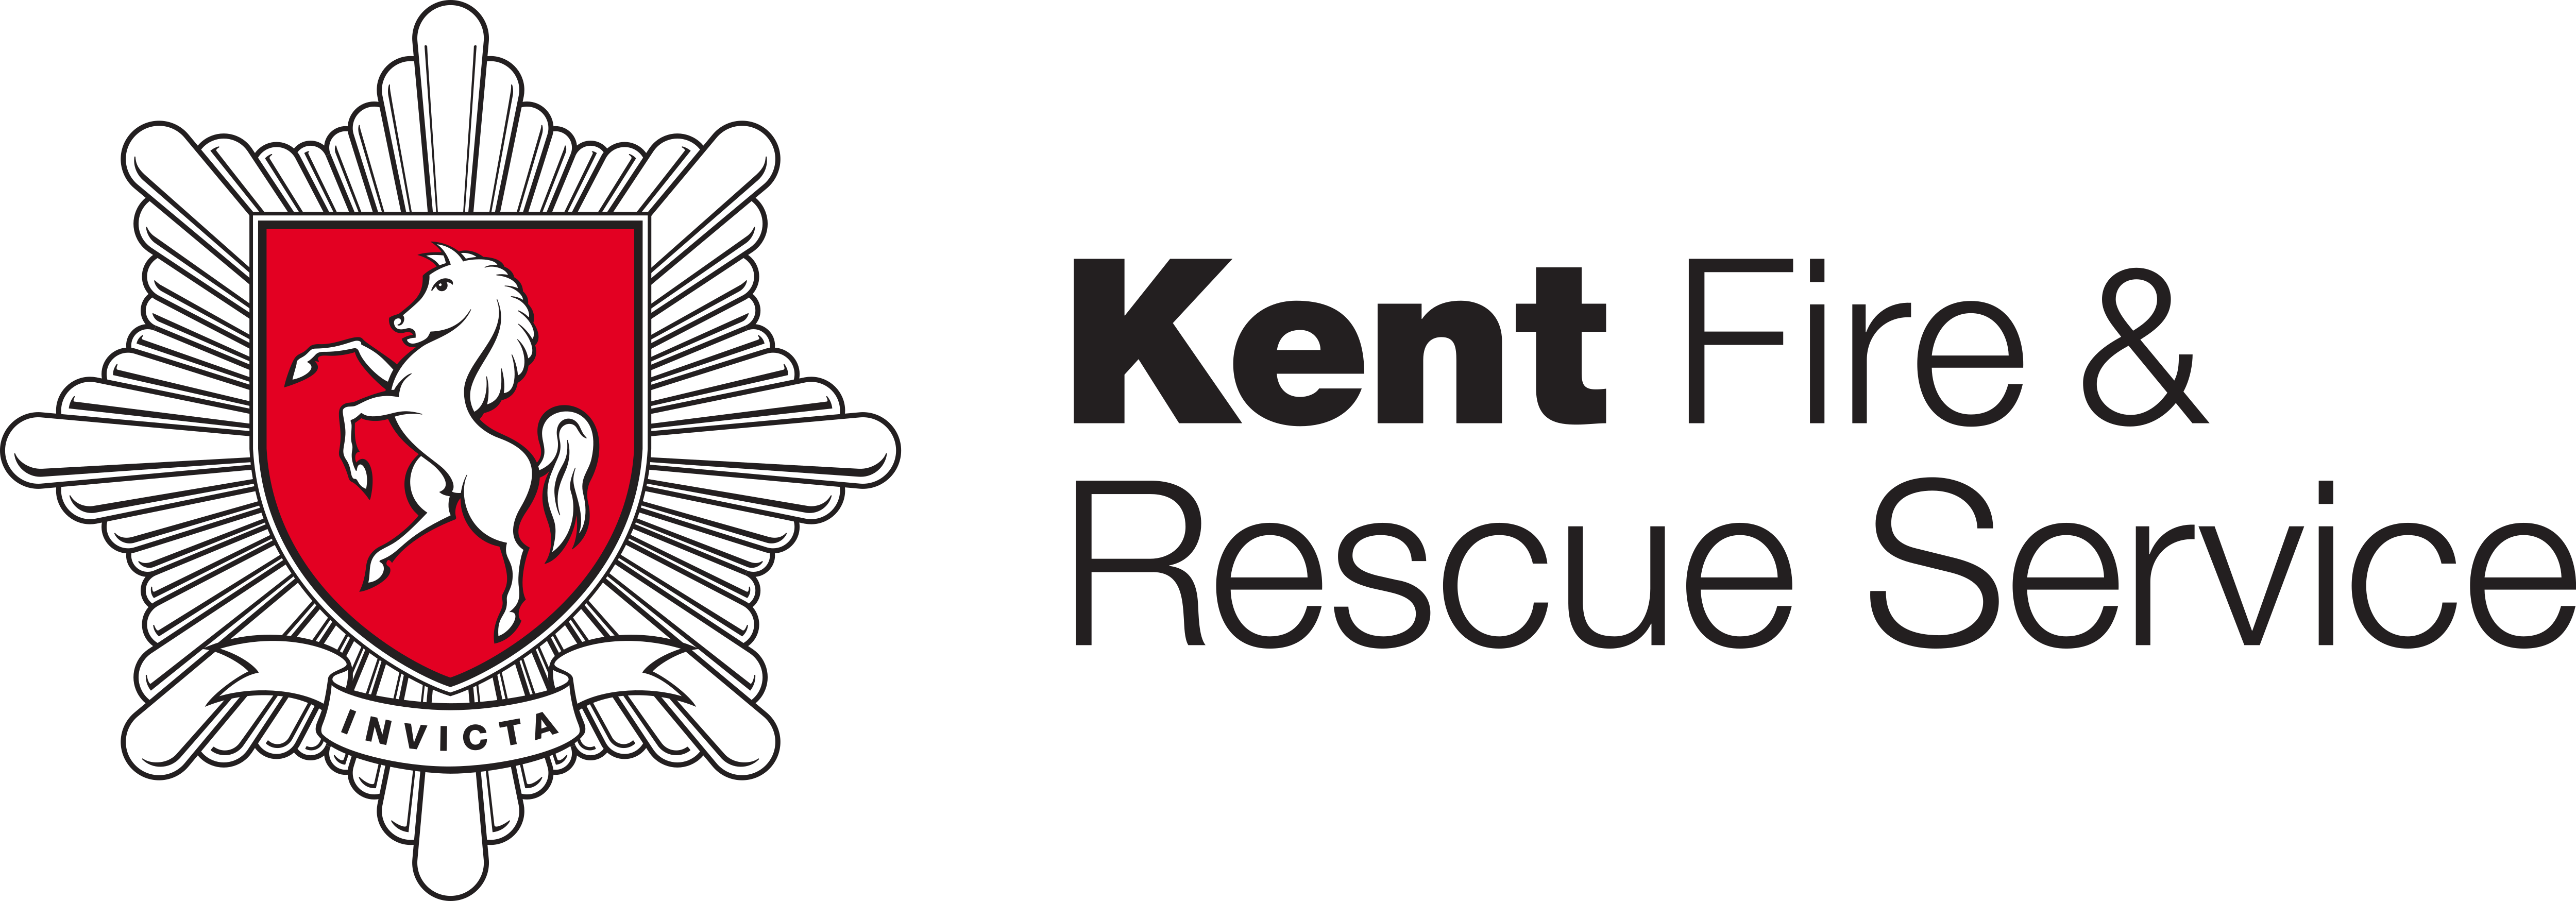 Fire And Rescue Service Logo